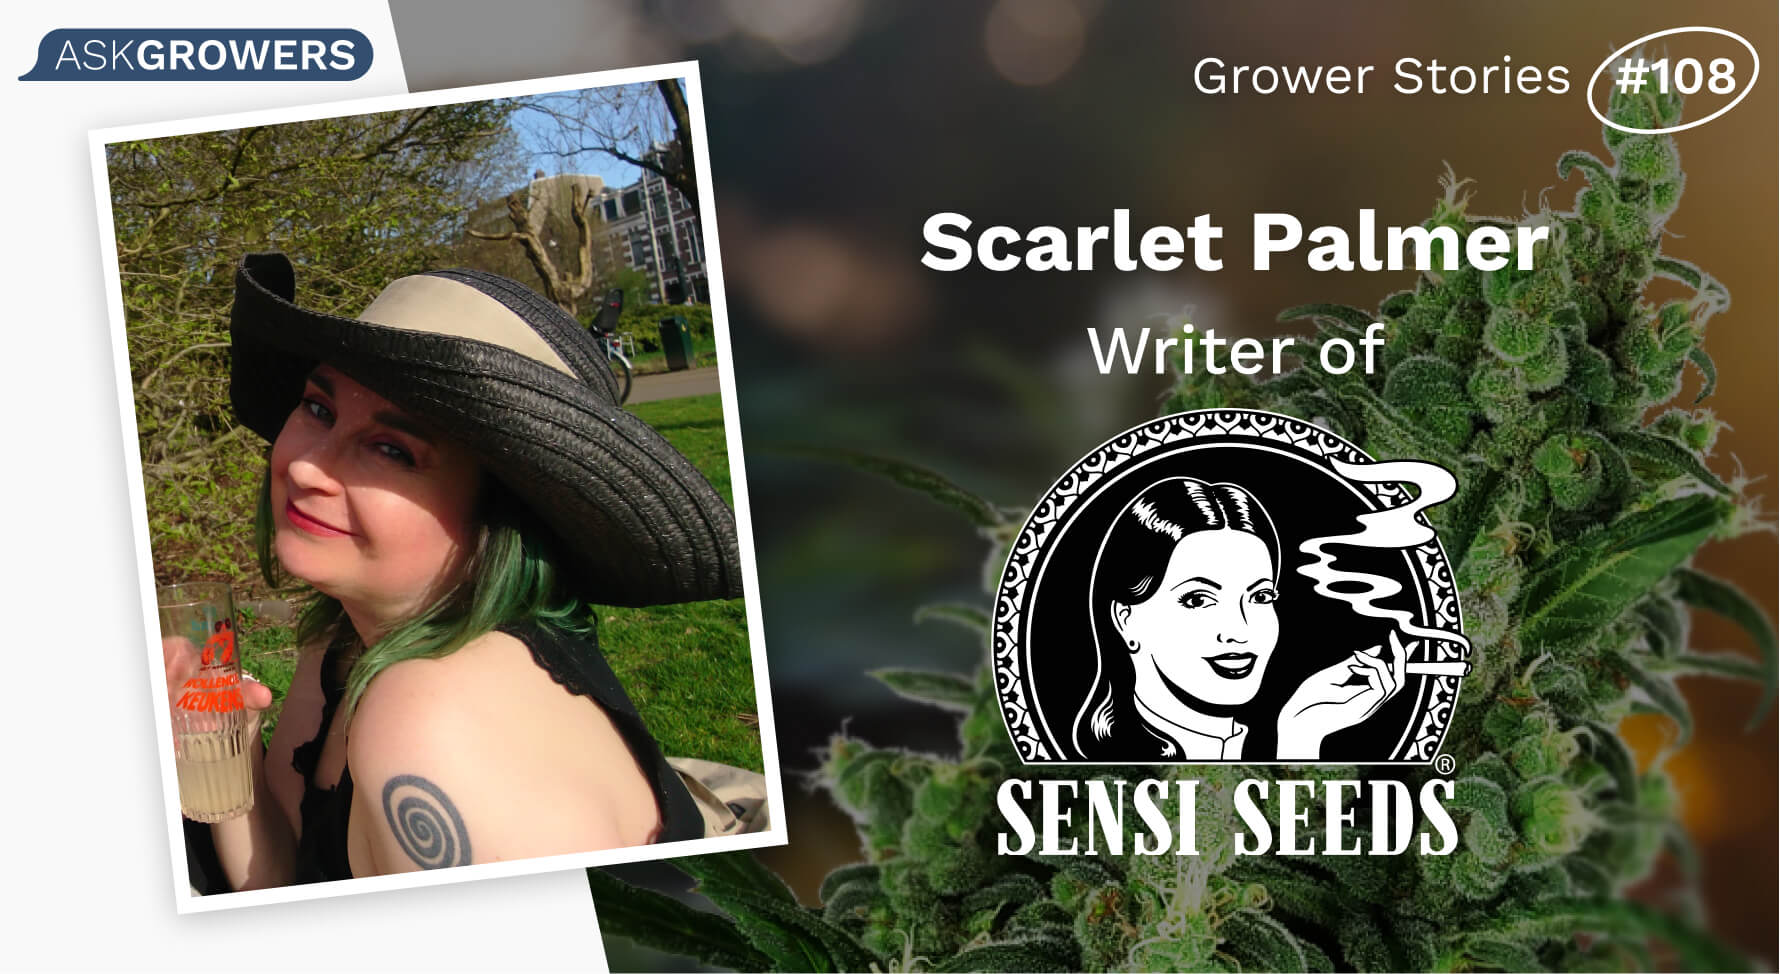 Grower Stories #108: Scarlet Palmer